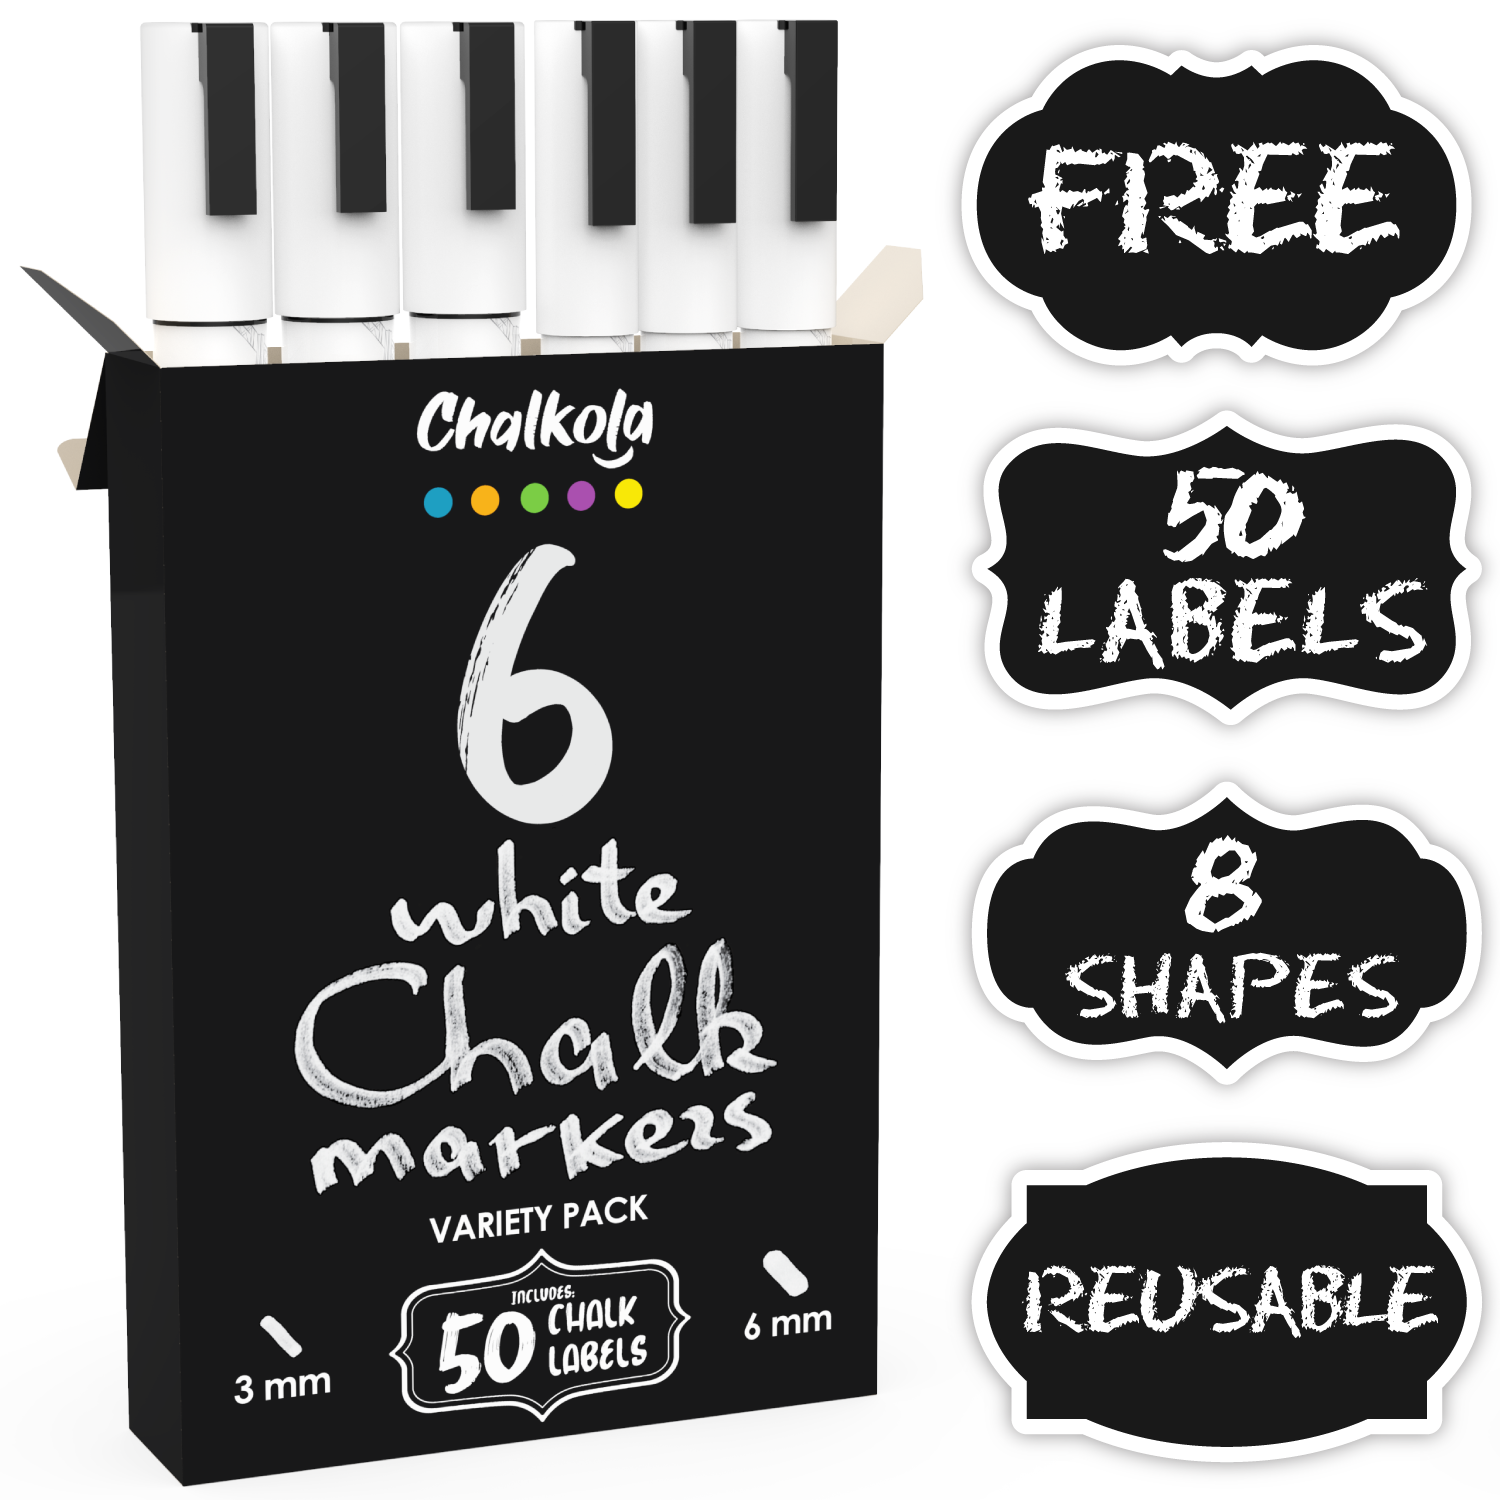 Acrylic Paint Marker Pens - Variety Pack of 6, Extra Fine & Medium